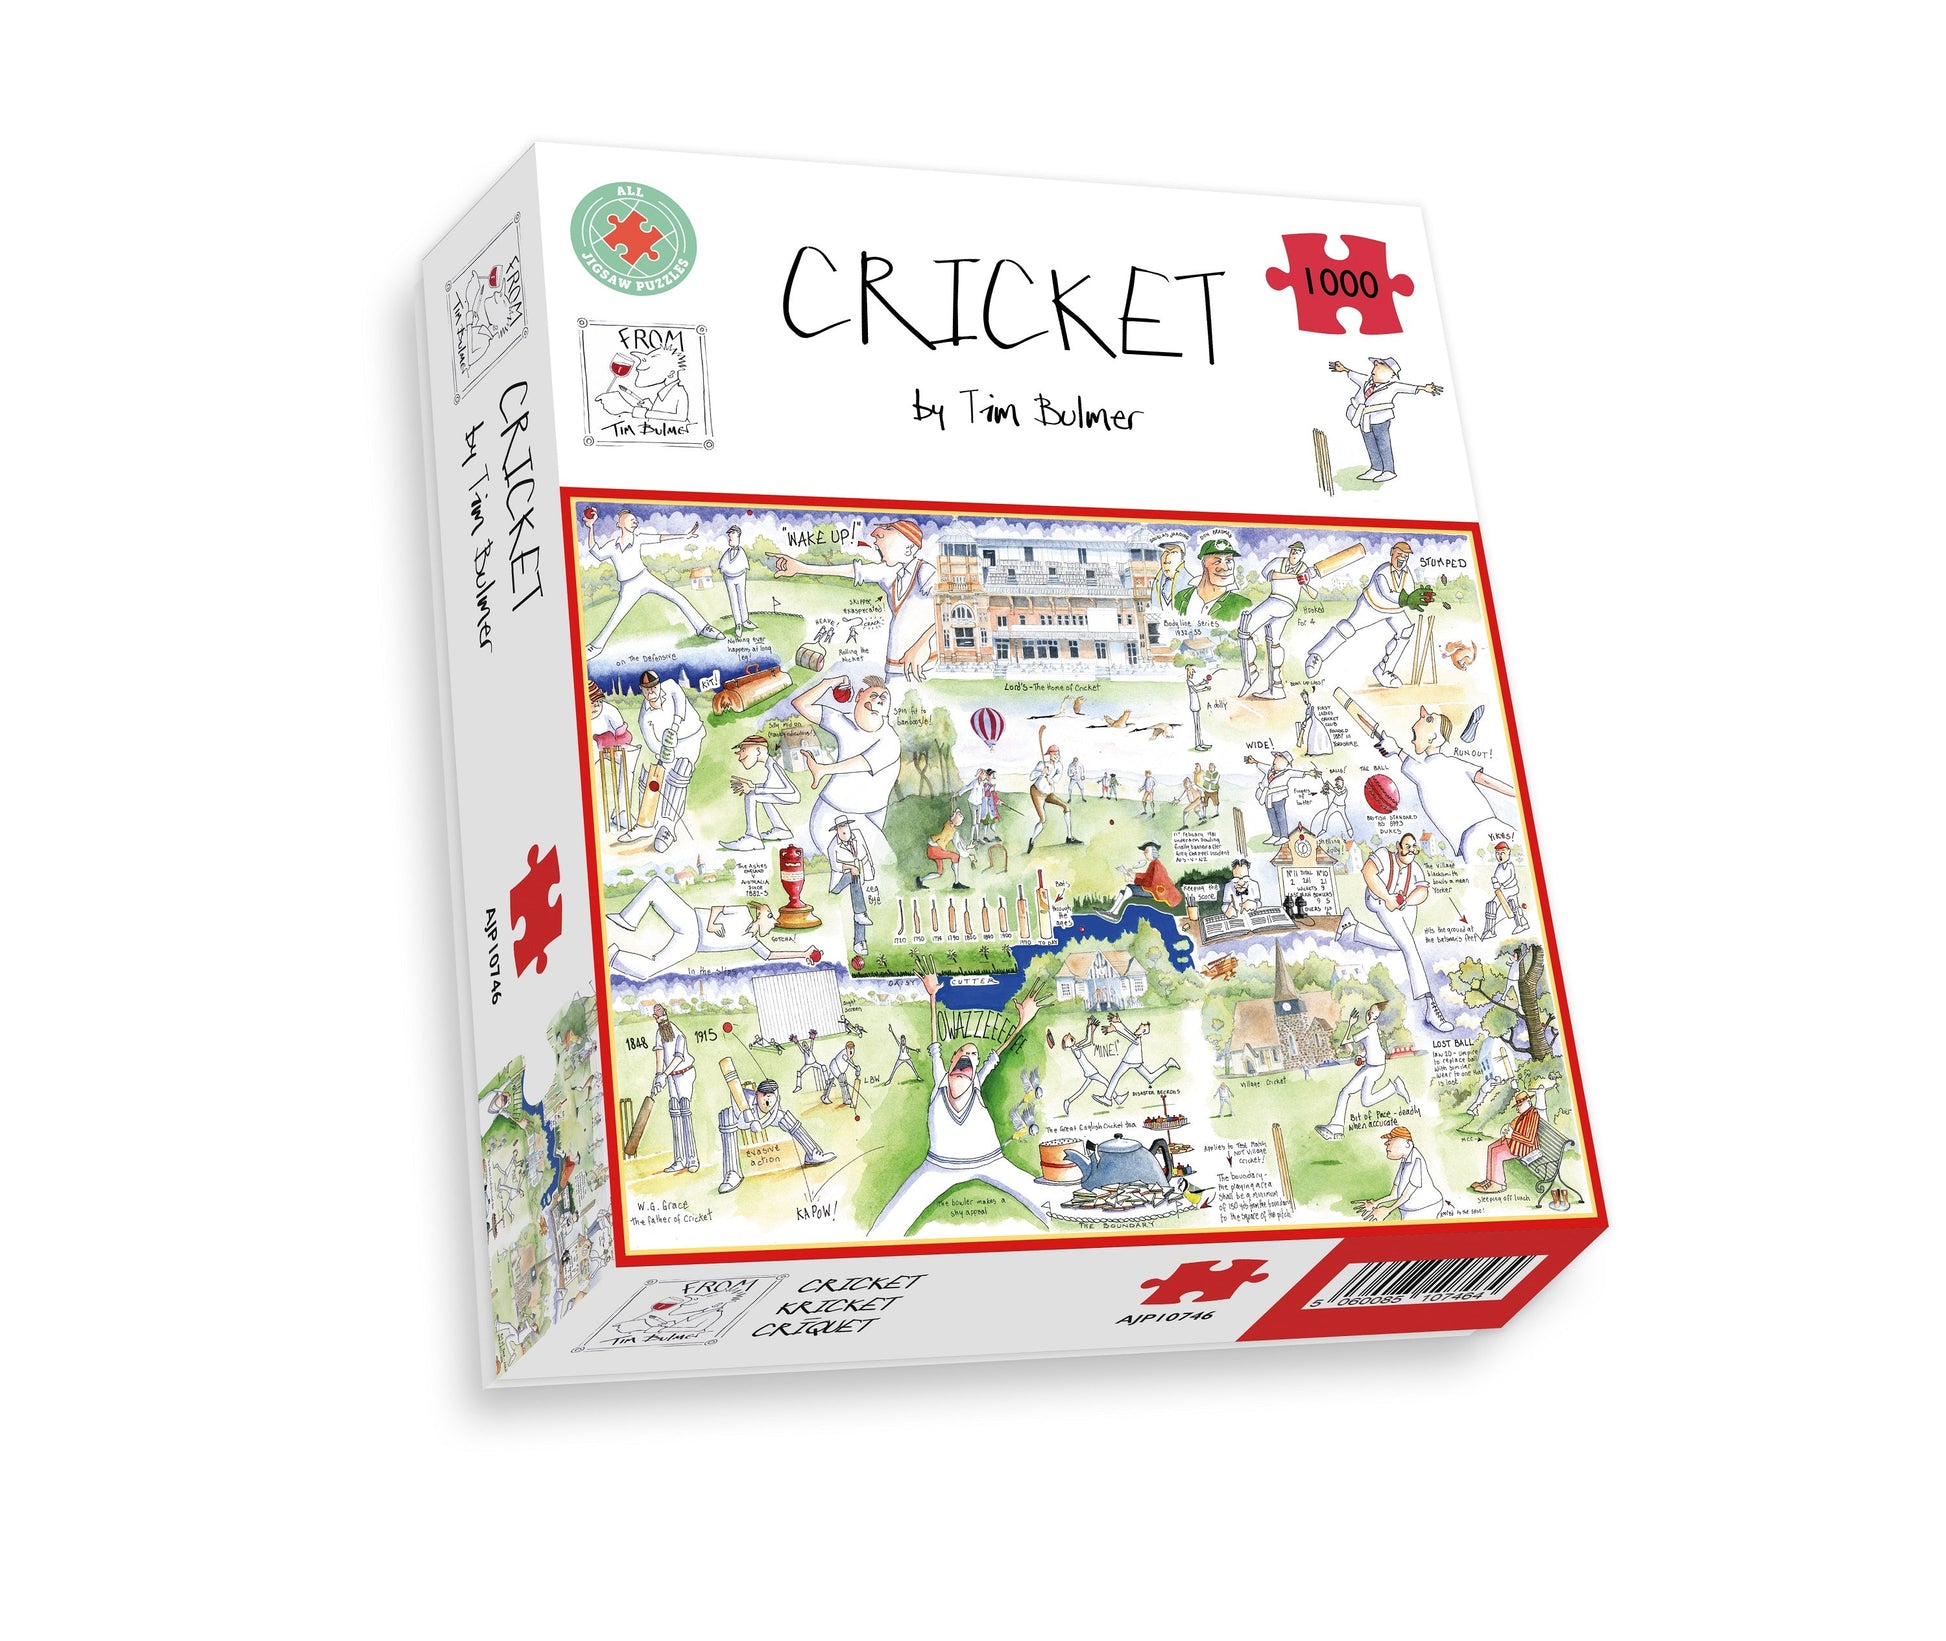 Cricket - Tim Bulmer 1000 Piece Jigsaw Puzzle box